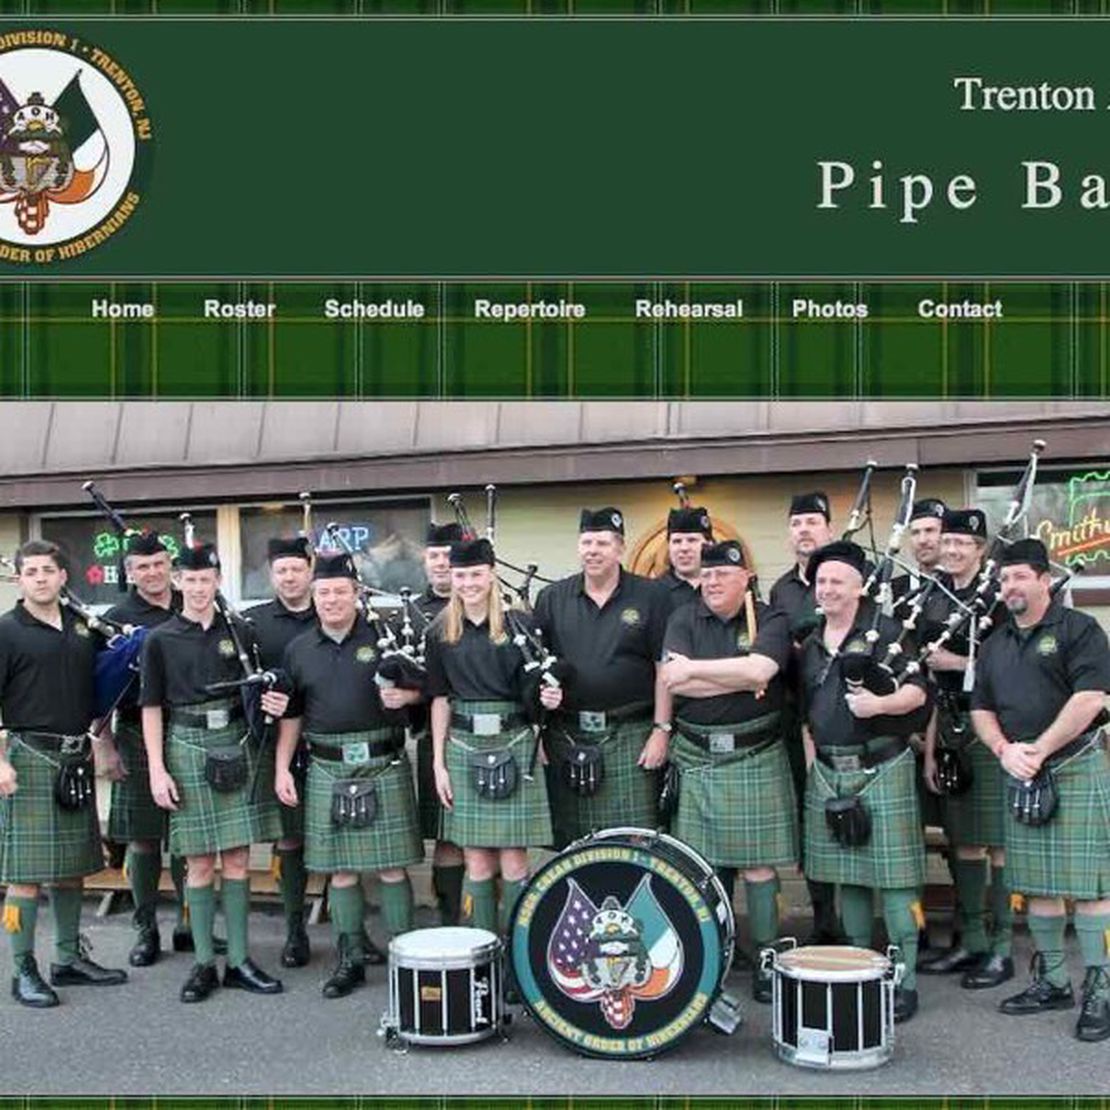 trenton aoh division 1 pipe band